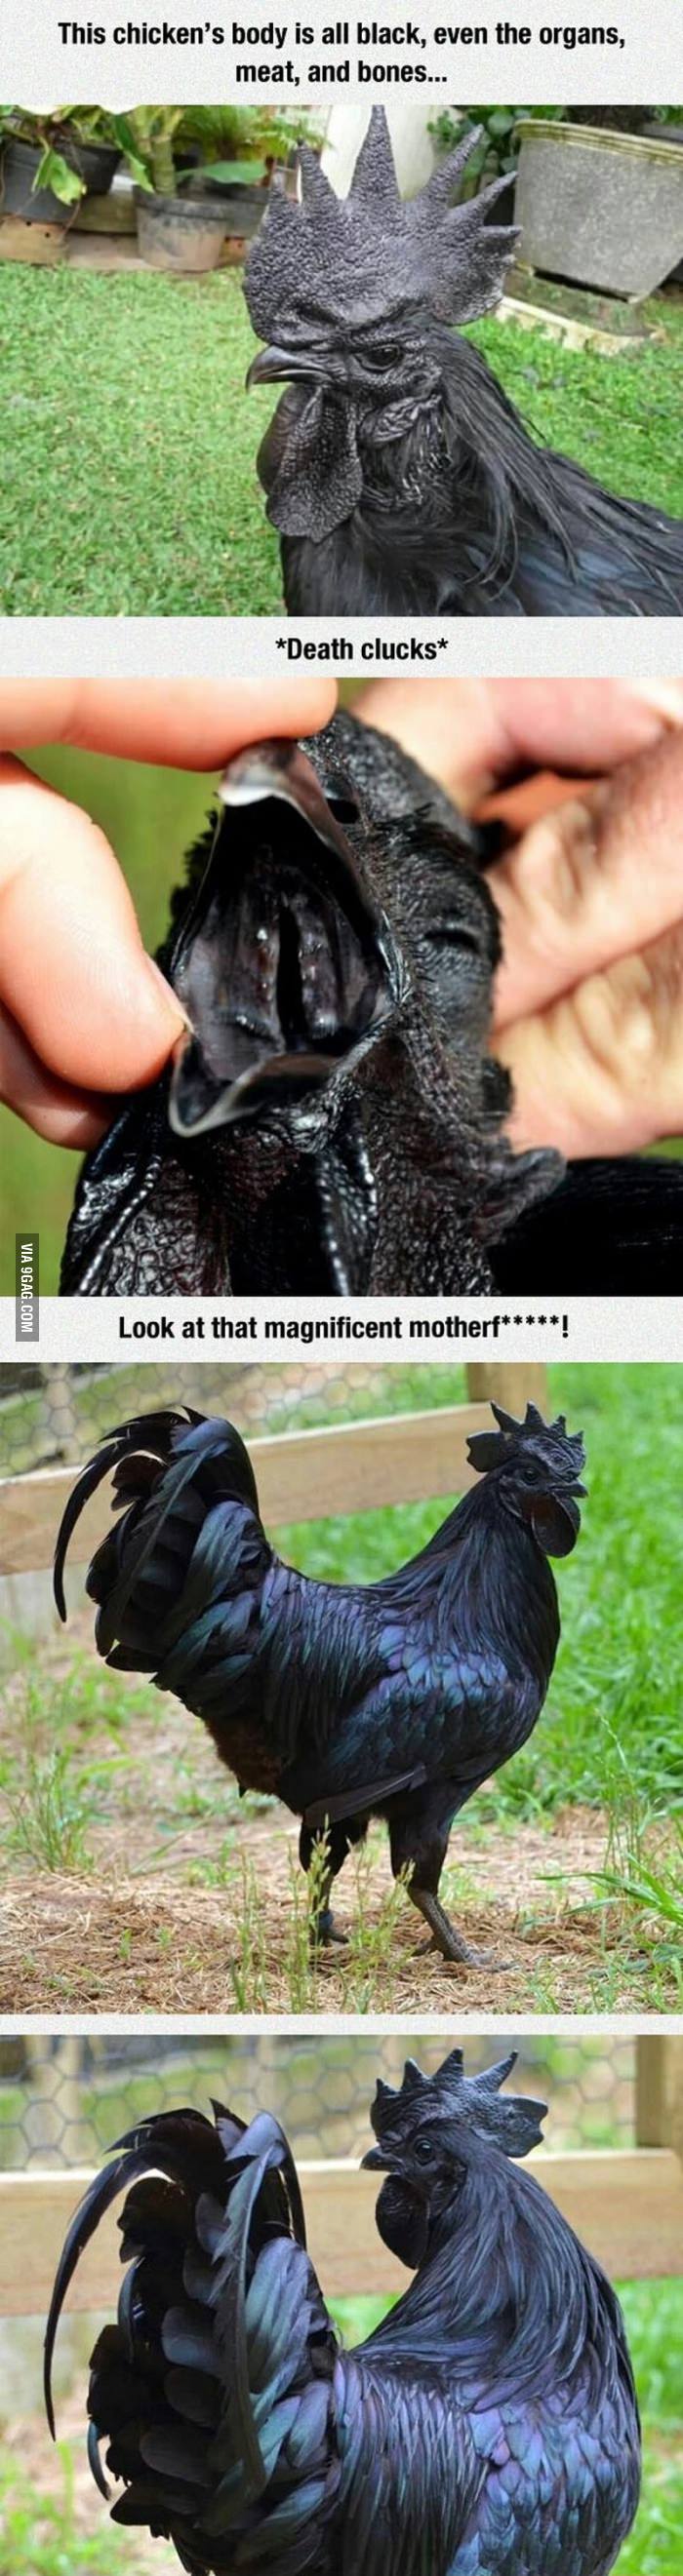 4. All black chicken